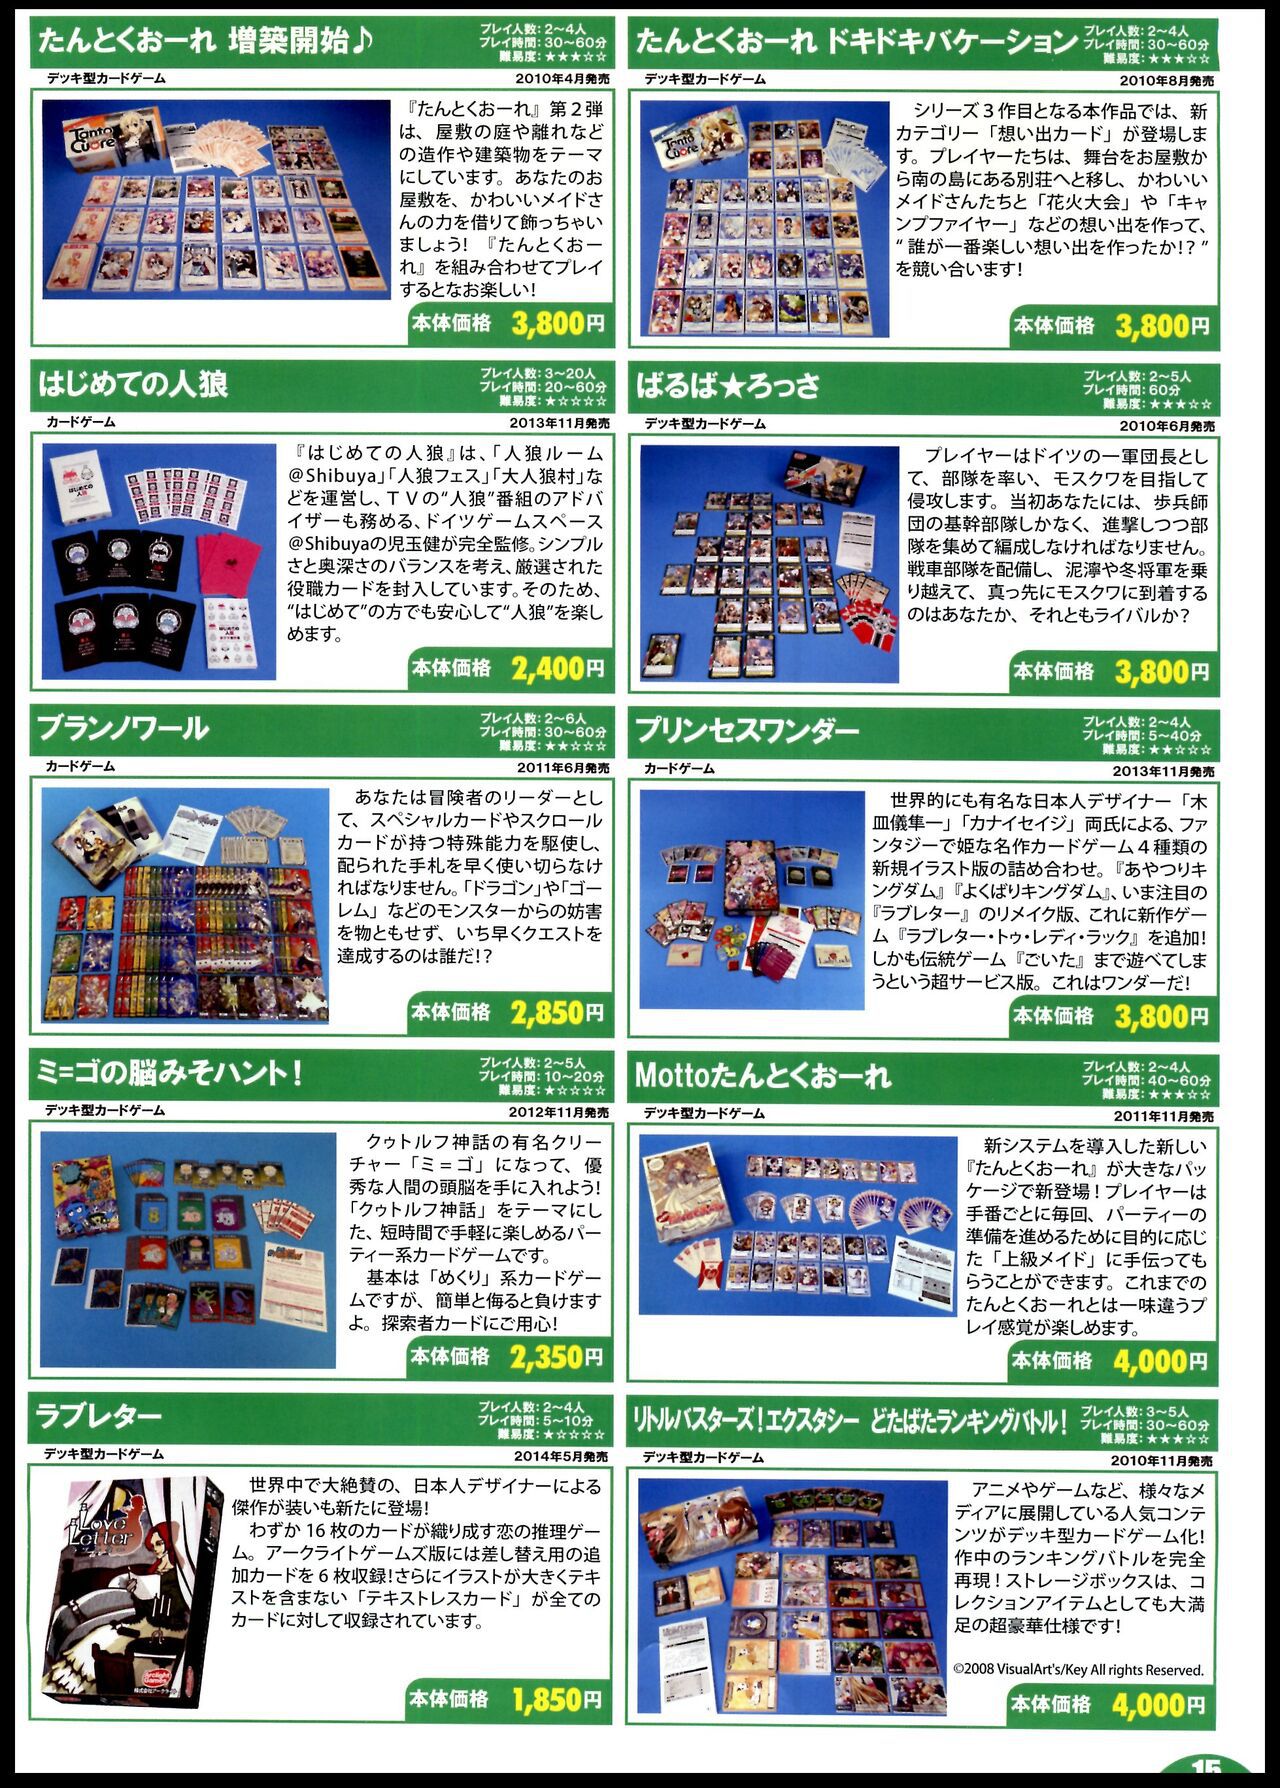 [Arclight Games] Board game catalog 2014 Summer - Autumn [アークライト] ボードゲームカタログ 2014 夏-秋 15